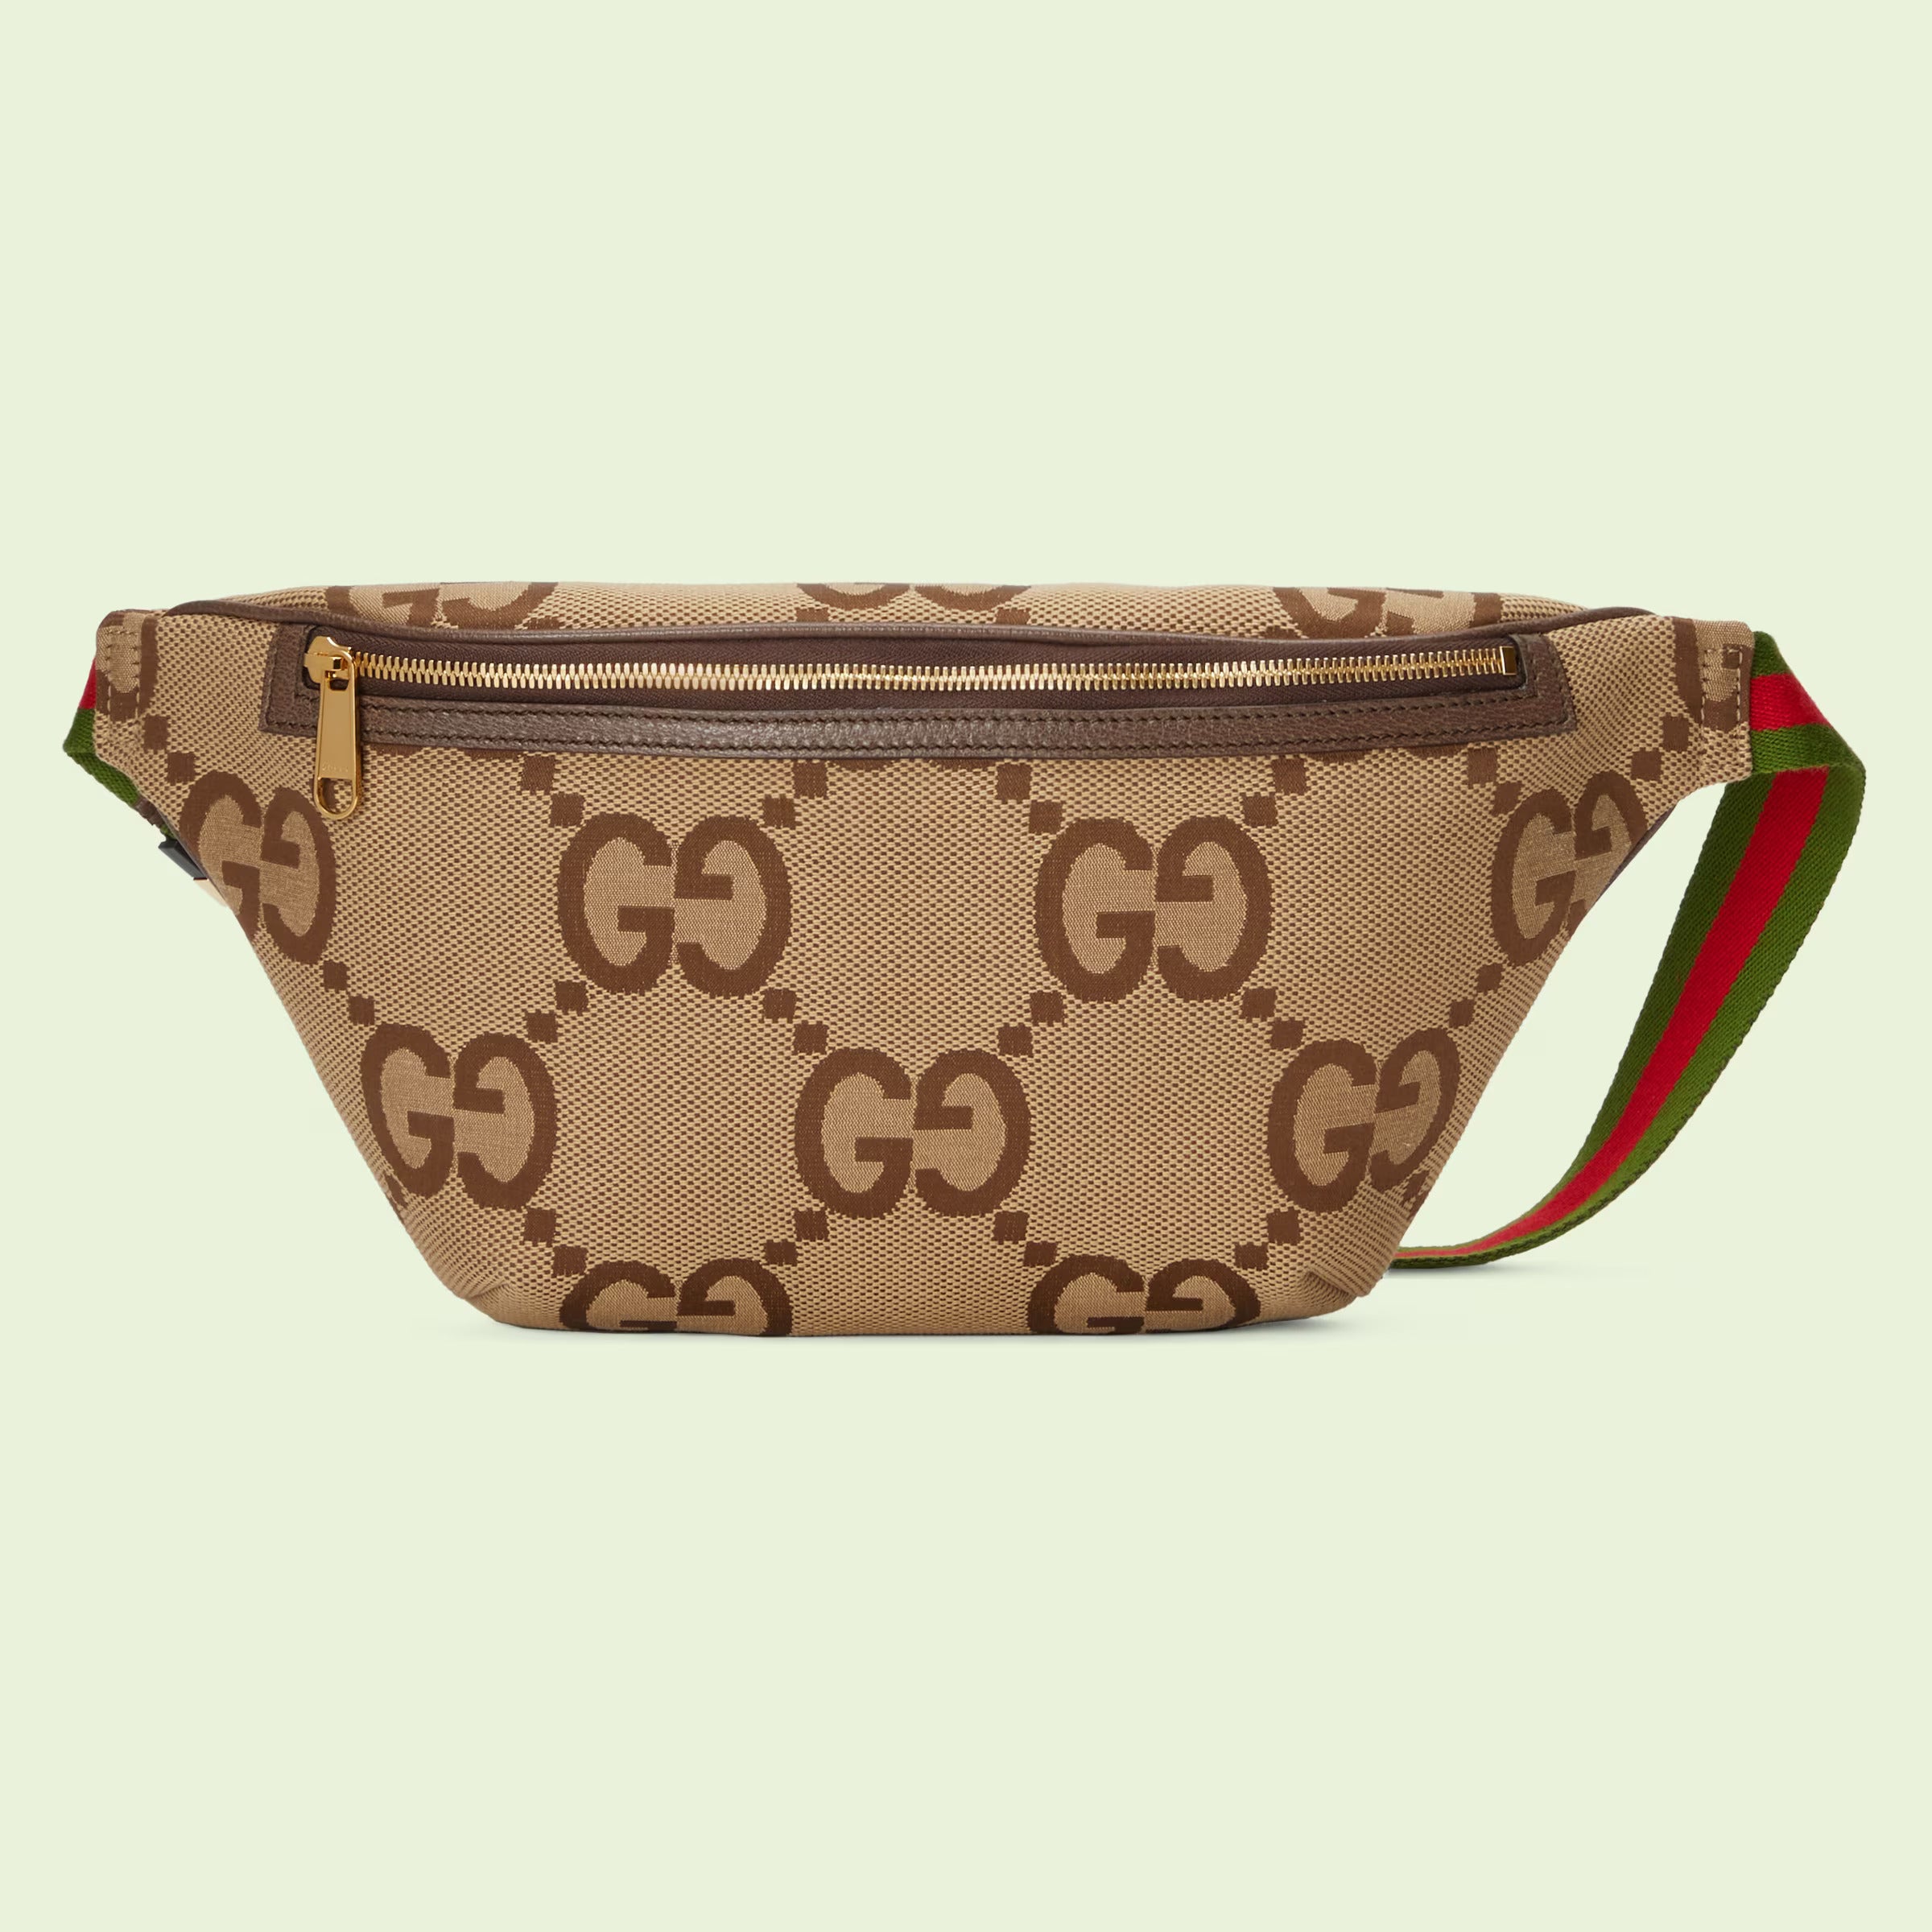 Gucci Jumbo GG Belt Bag (Camel and Ebony)